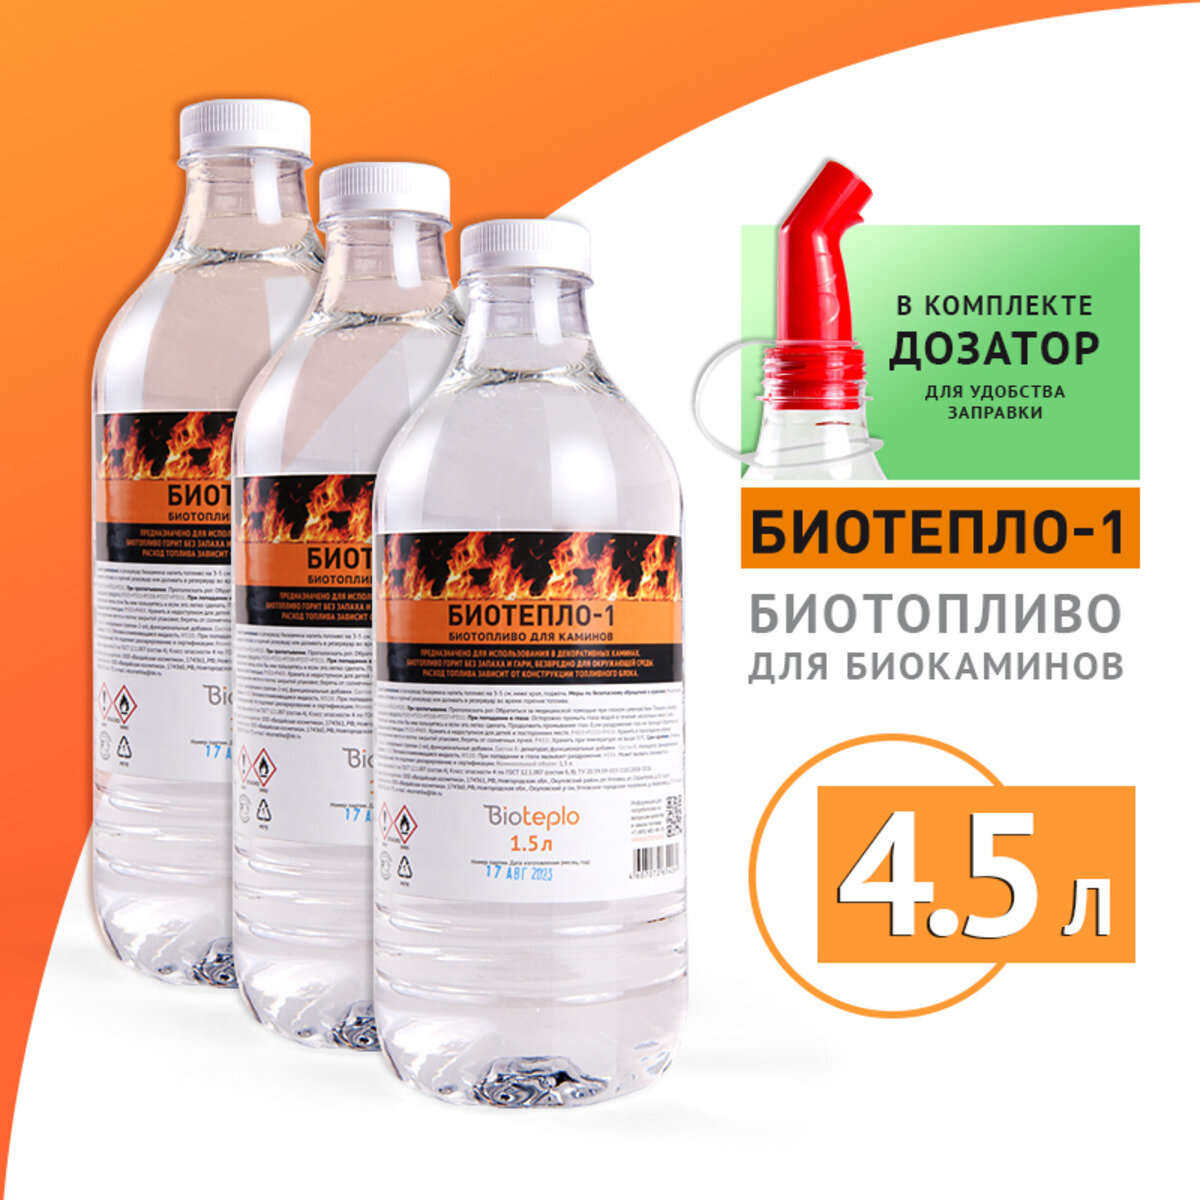 Биотопливо для биокаминов "Биотепло-1" 45 литра (3 бутылки по 1.5 литра)